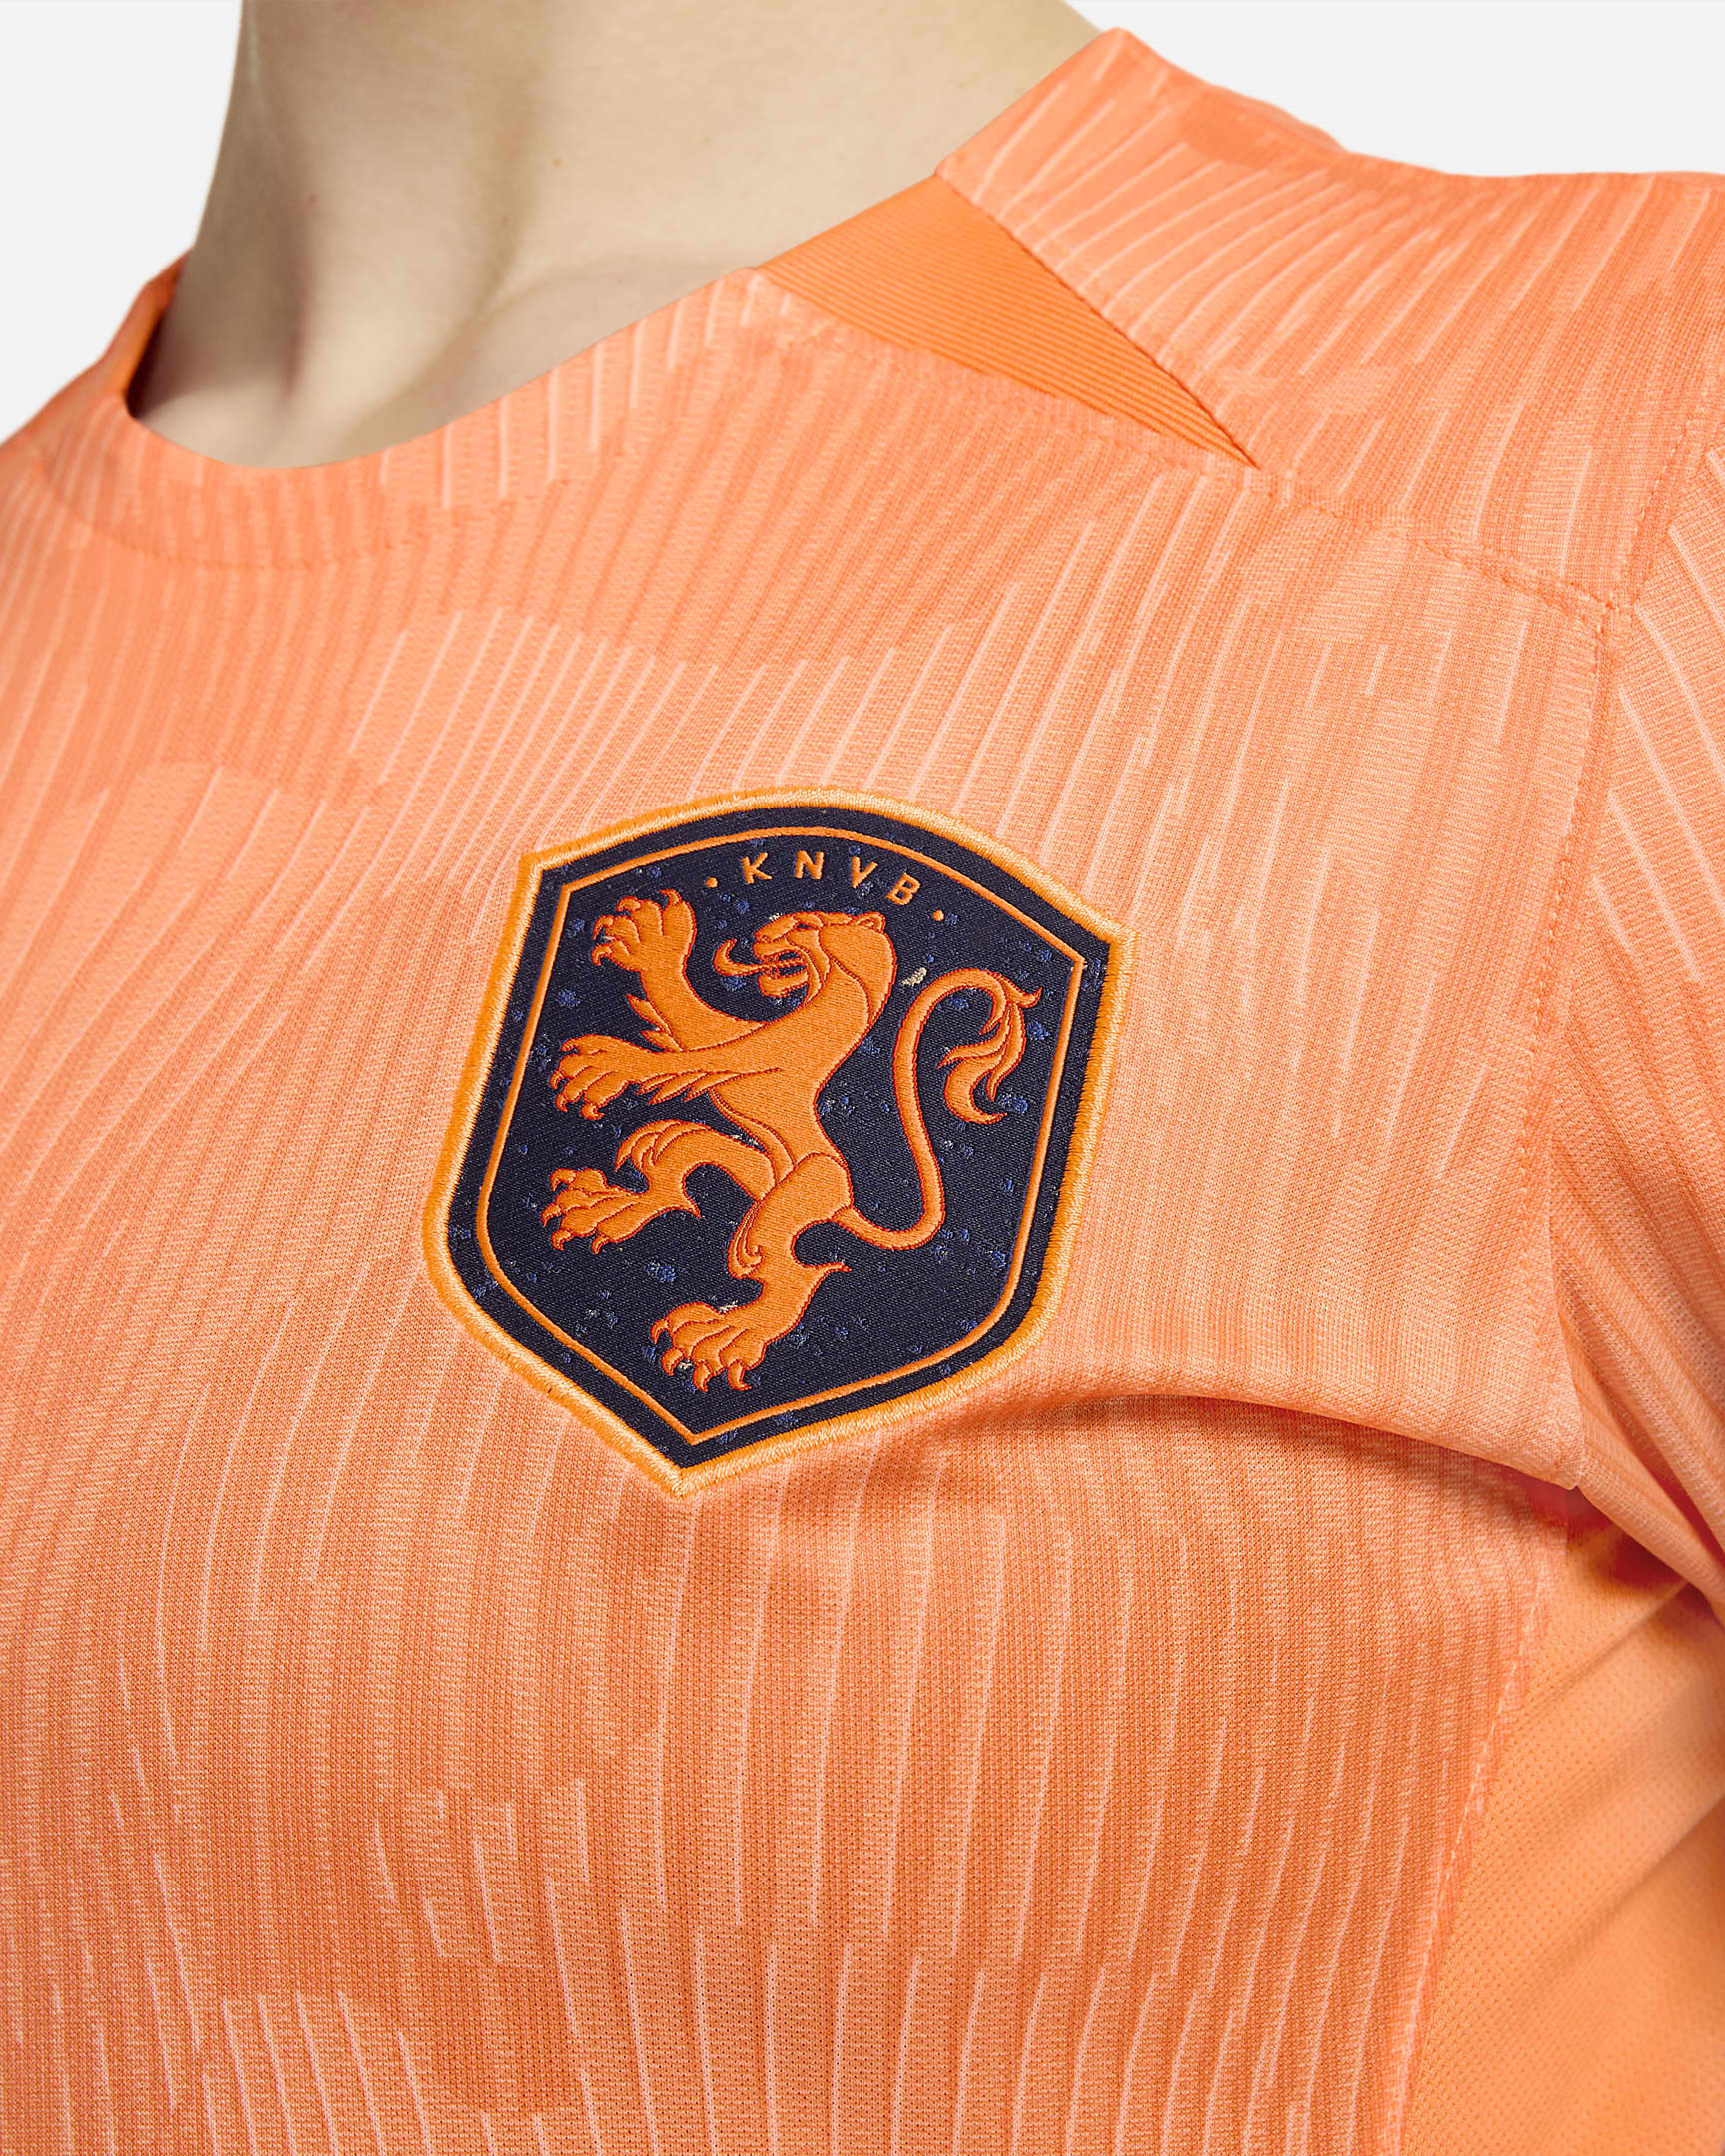 Netherlands 2023 Stadium Home Women's Nike Dri-FIT Soccer Jersey. Nike.com